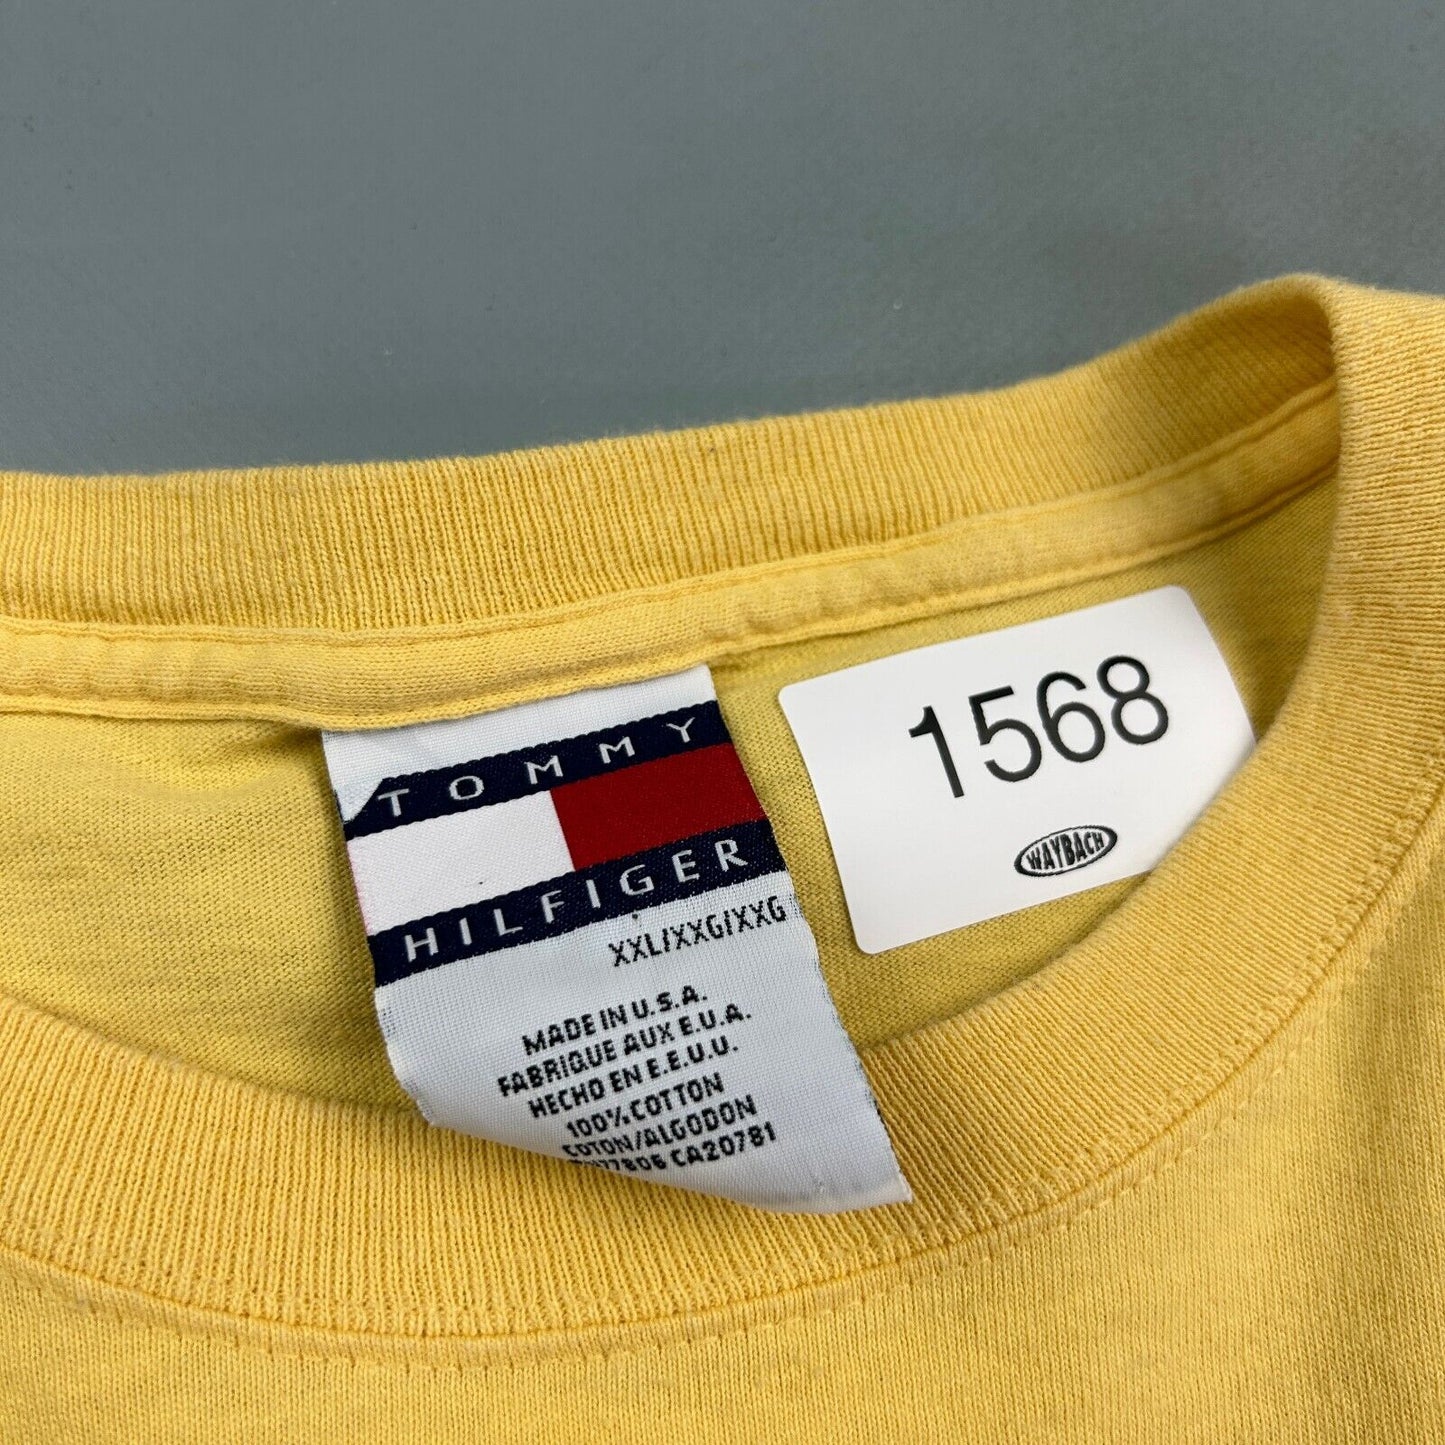 VINTAGE | Tommy Hilfiger Big Graphic Yellow T-Shirt sz XXL Men Adult